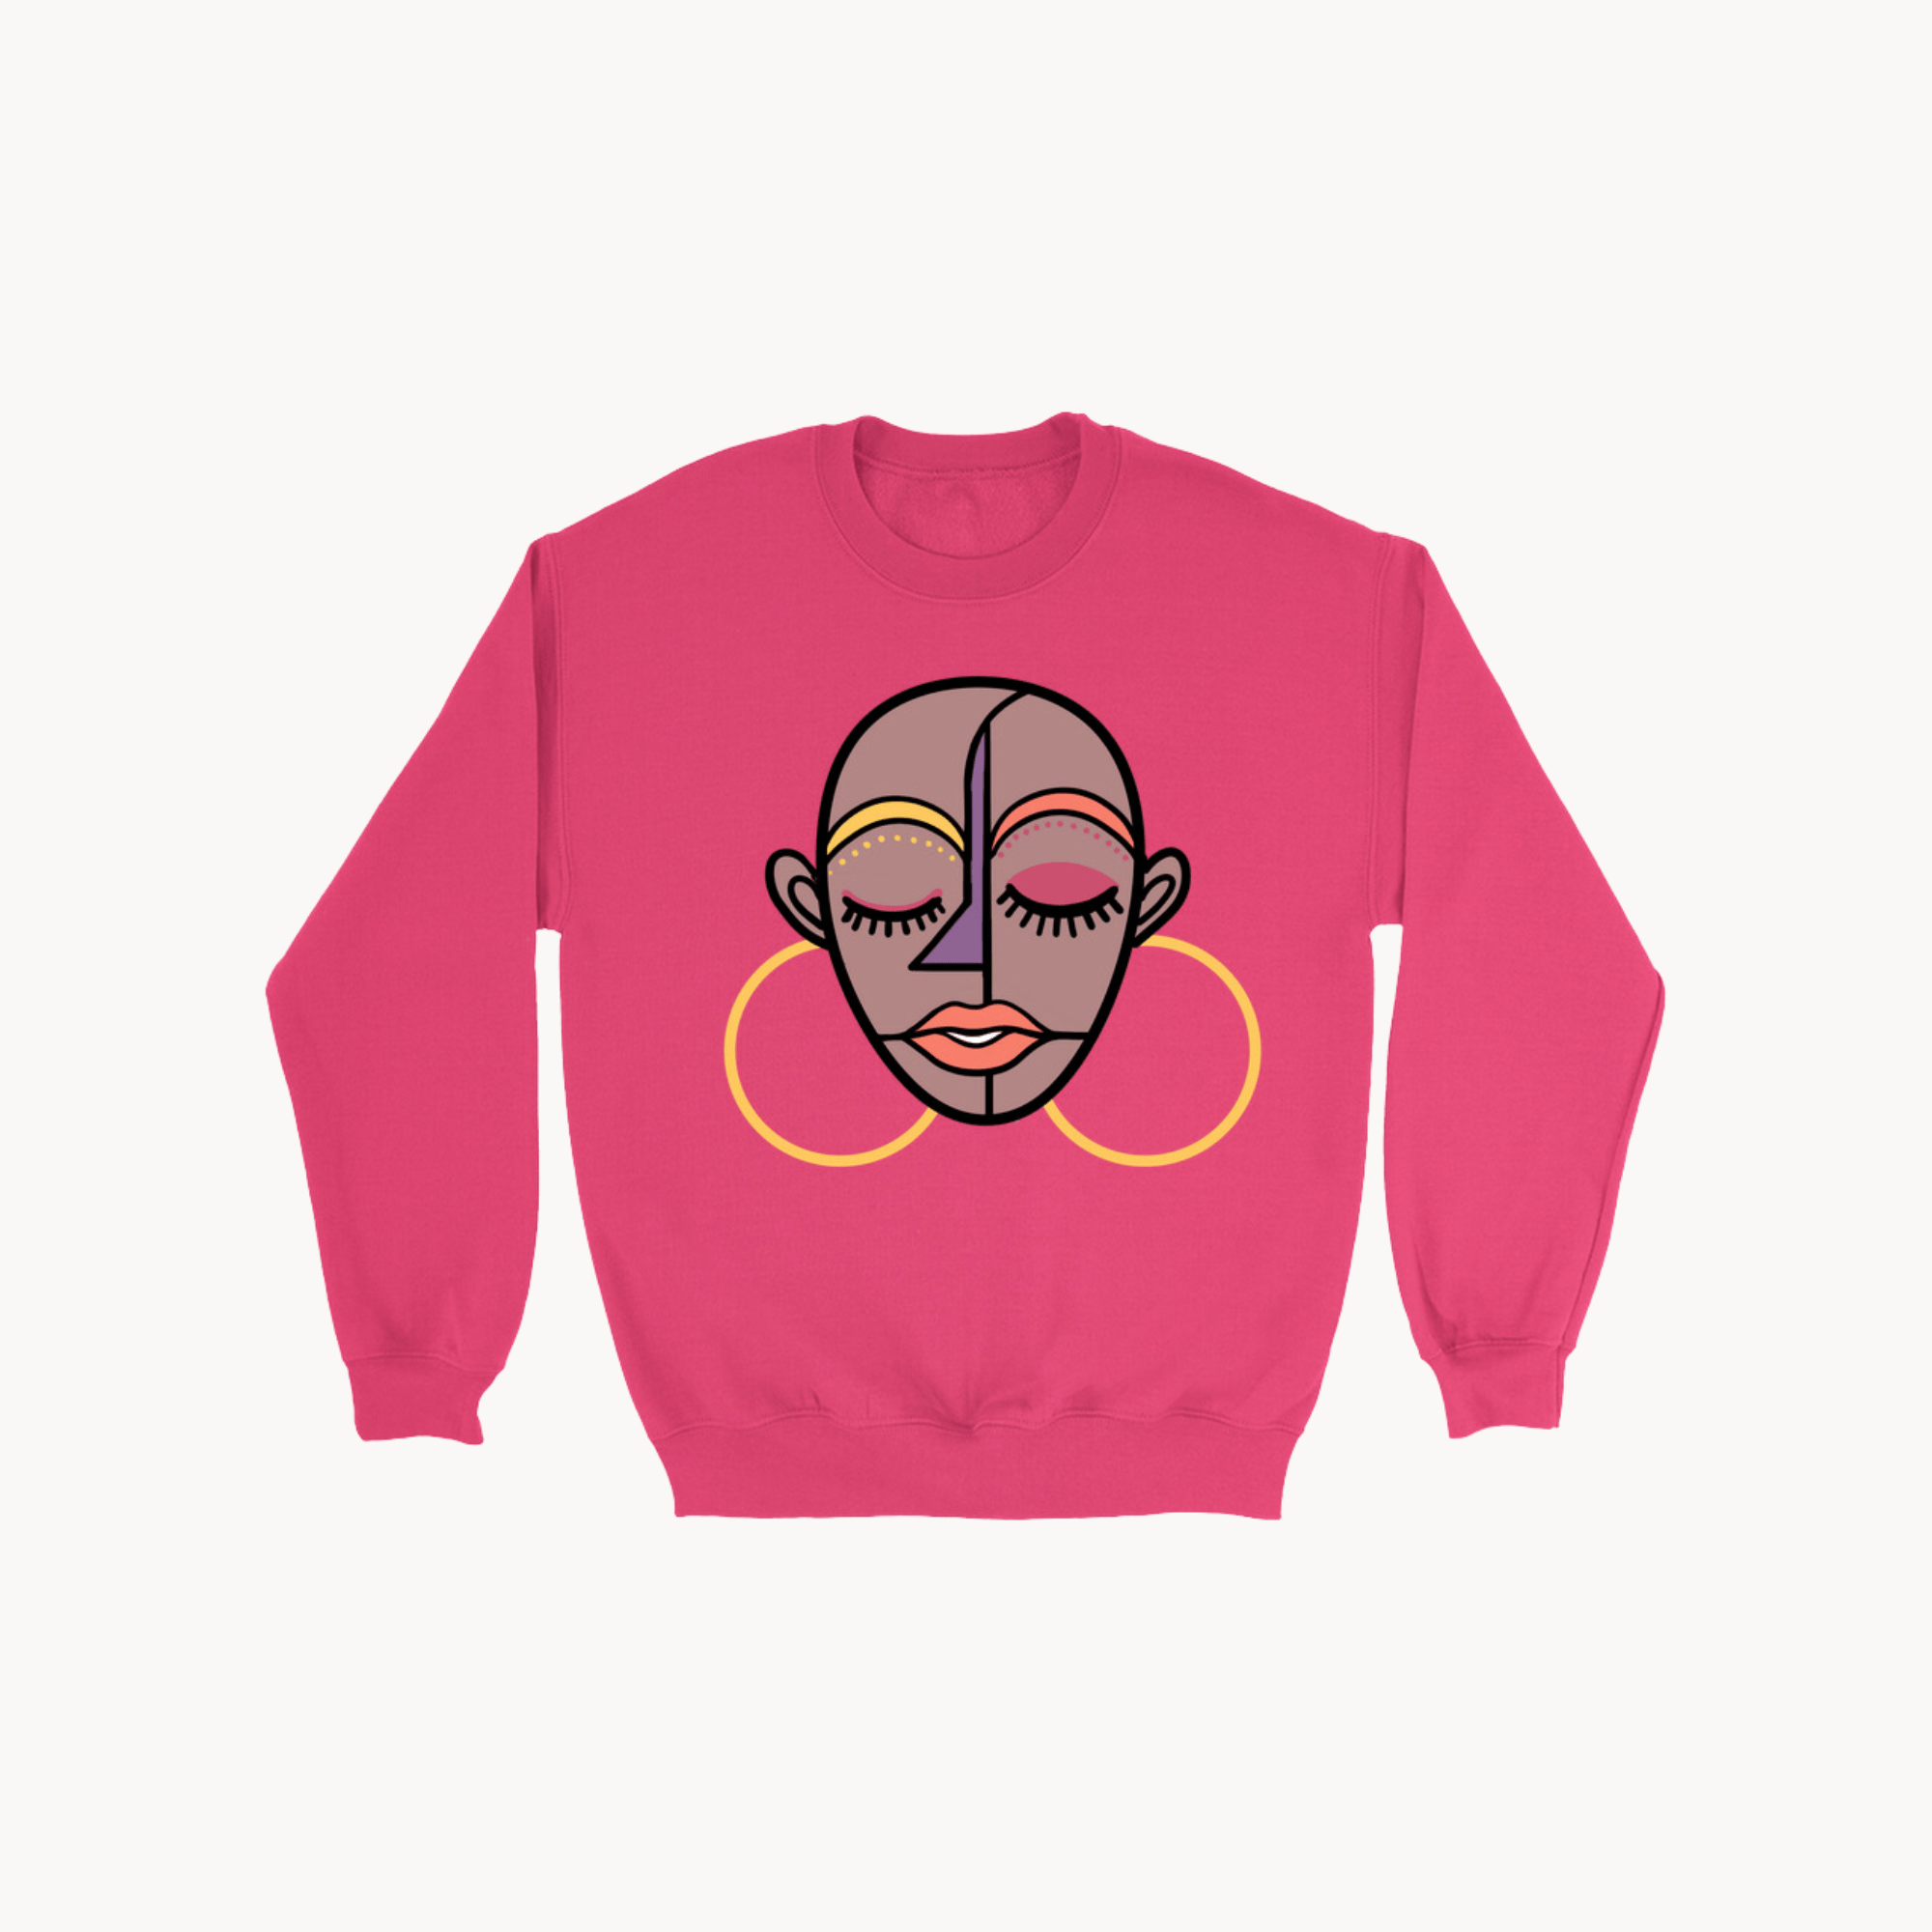 Mocha Sweatshirt - Pink - Kelly Obi New York